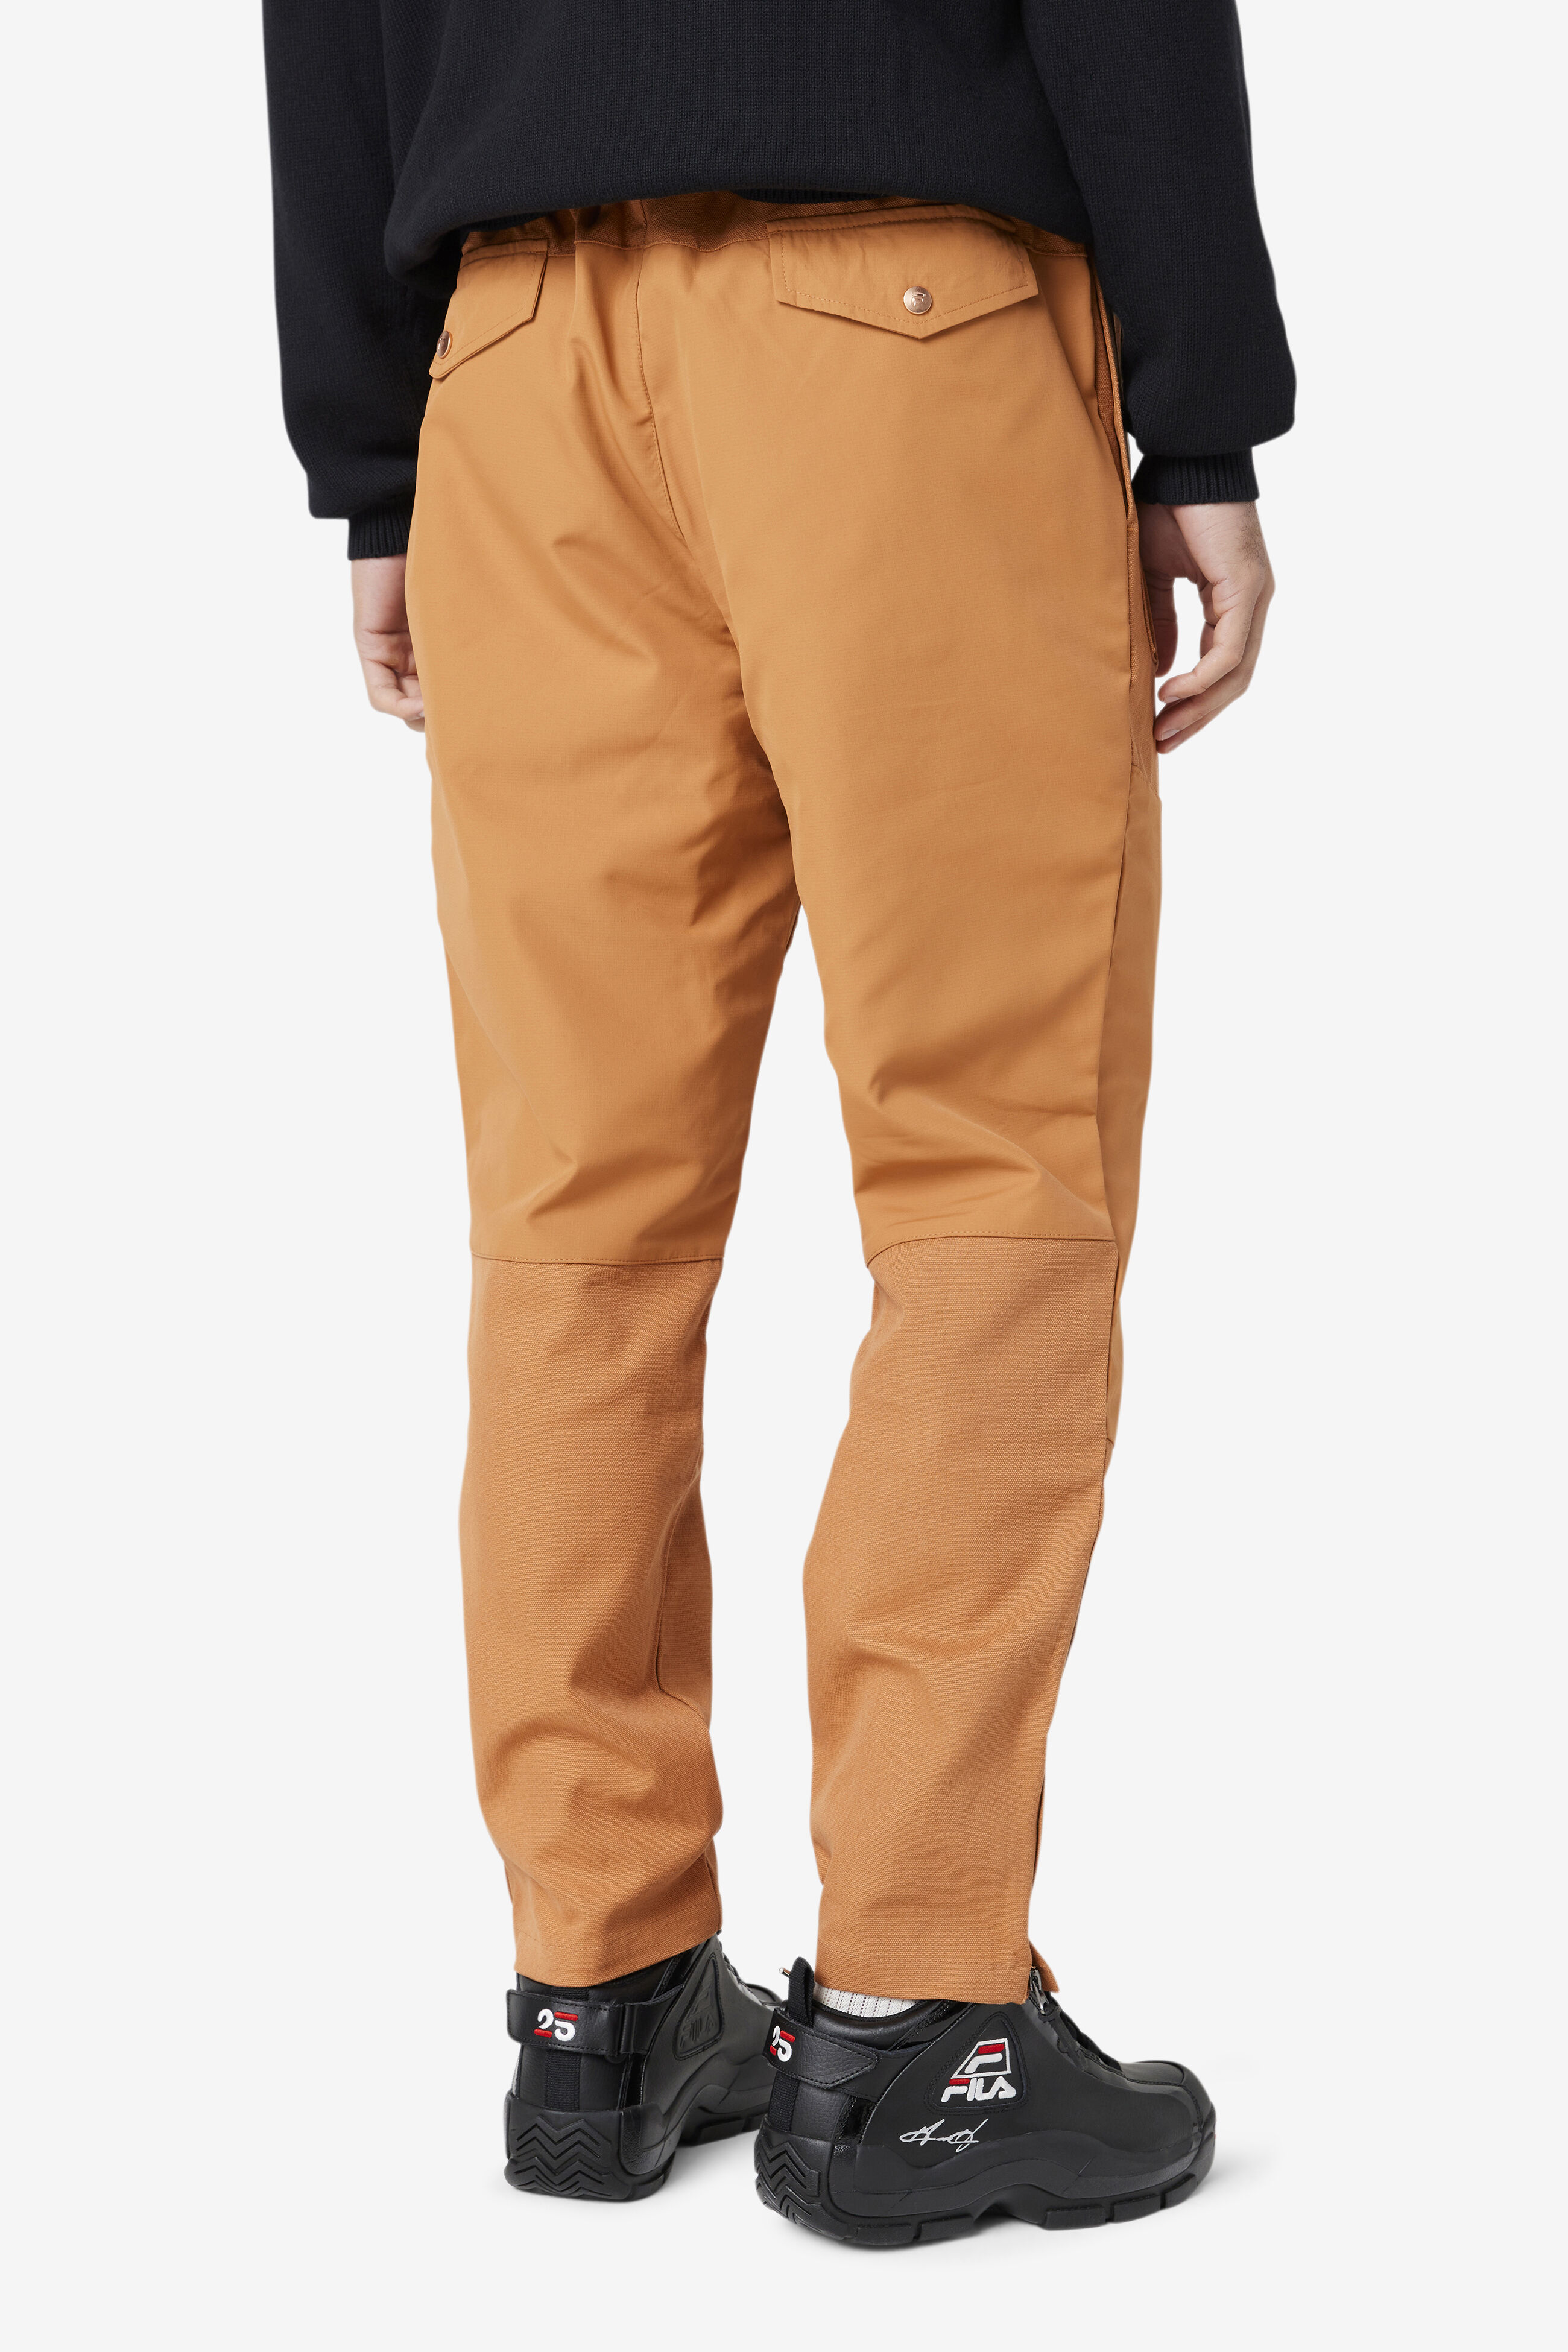 Buy FILA Navy Track Pants - Track Pants for Men 1217063 | Myntra